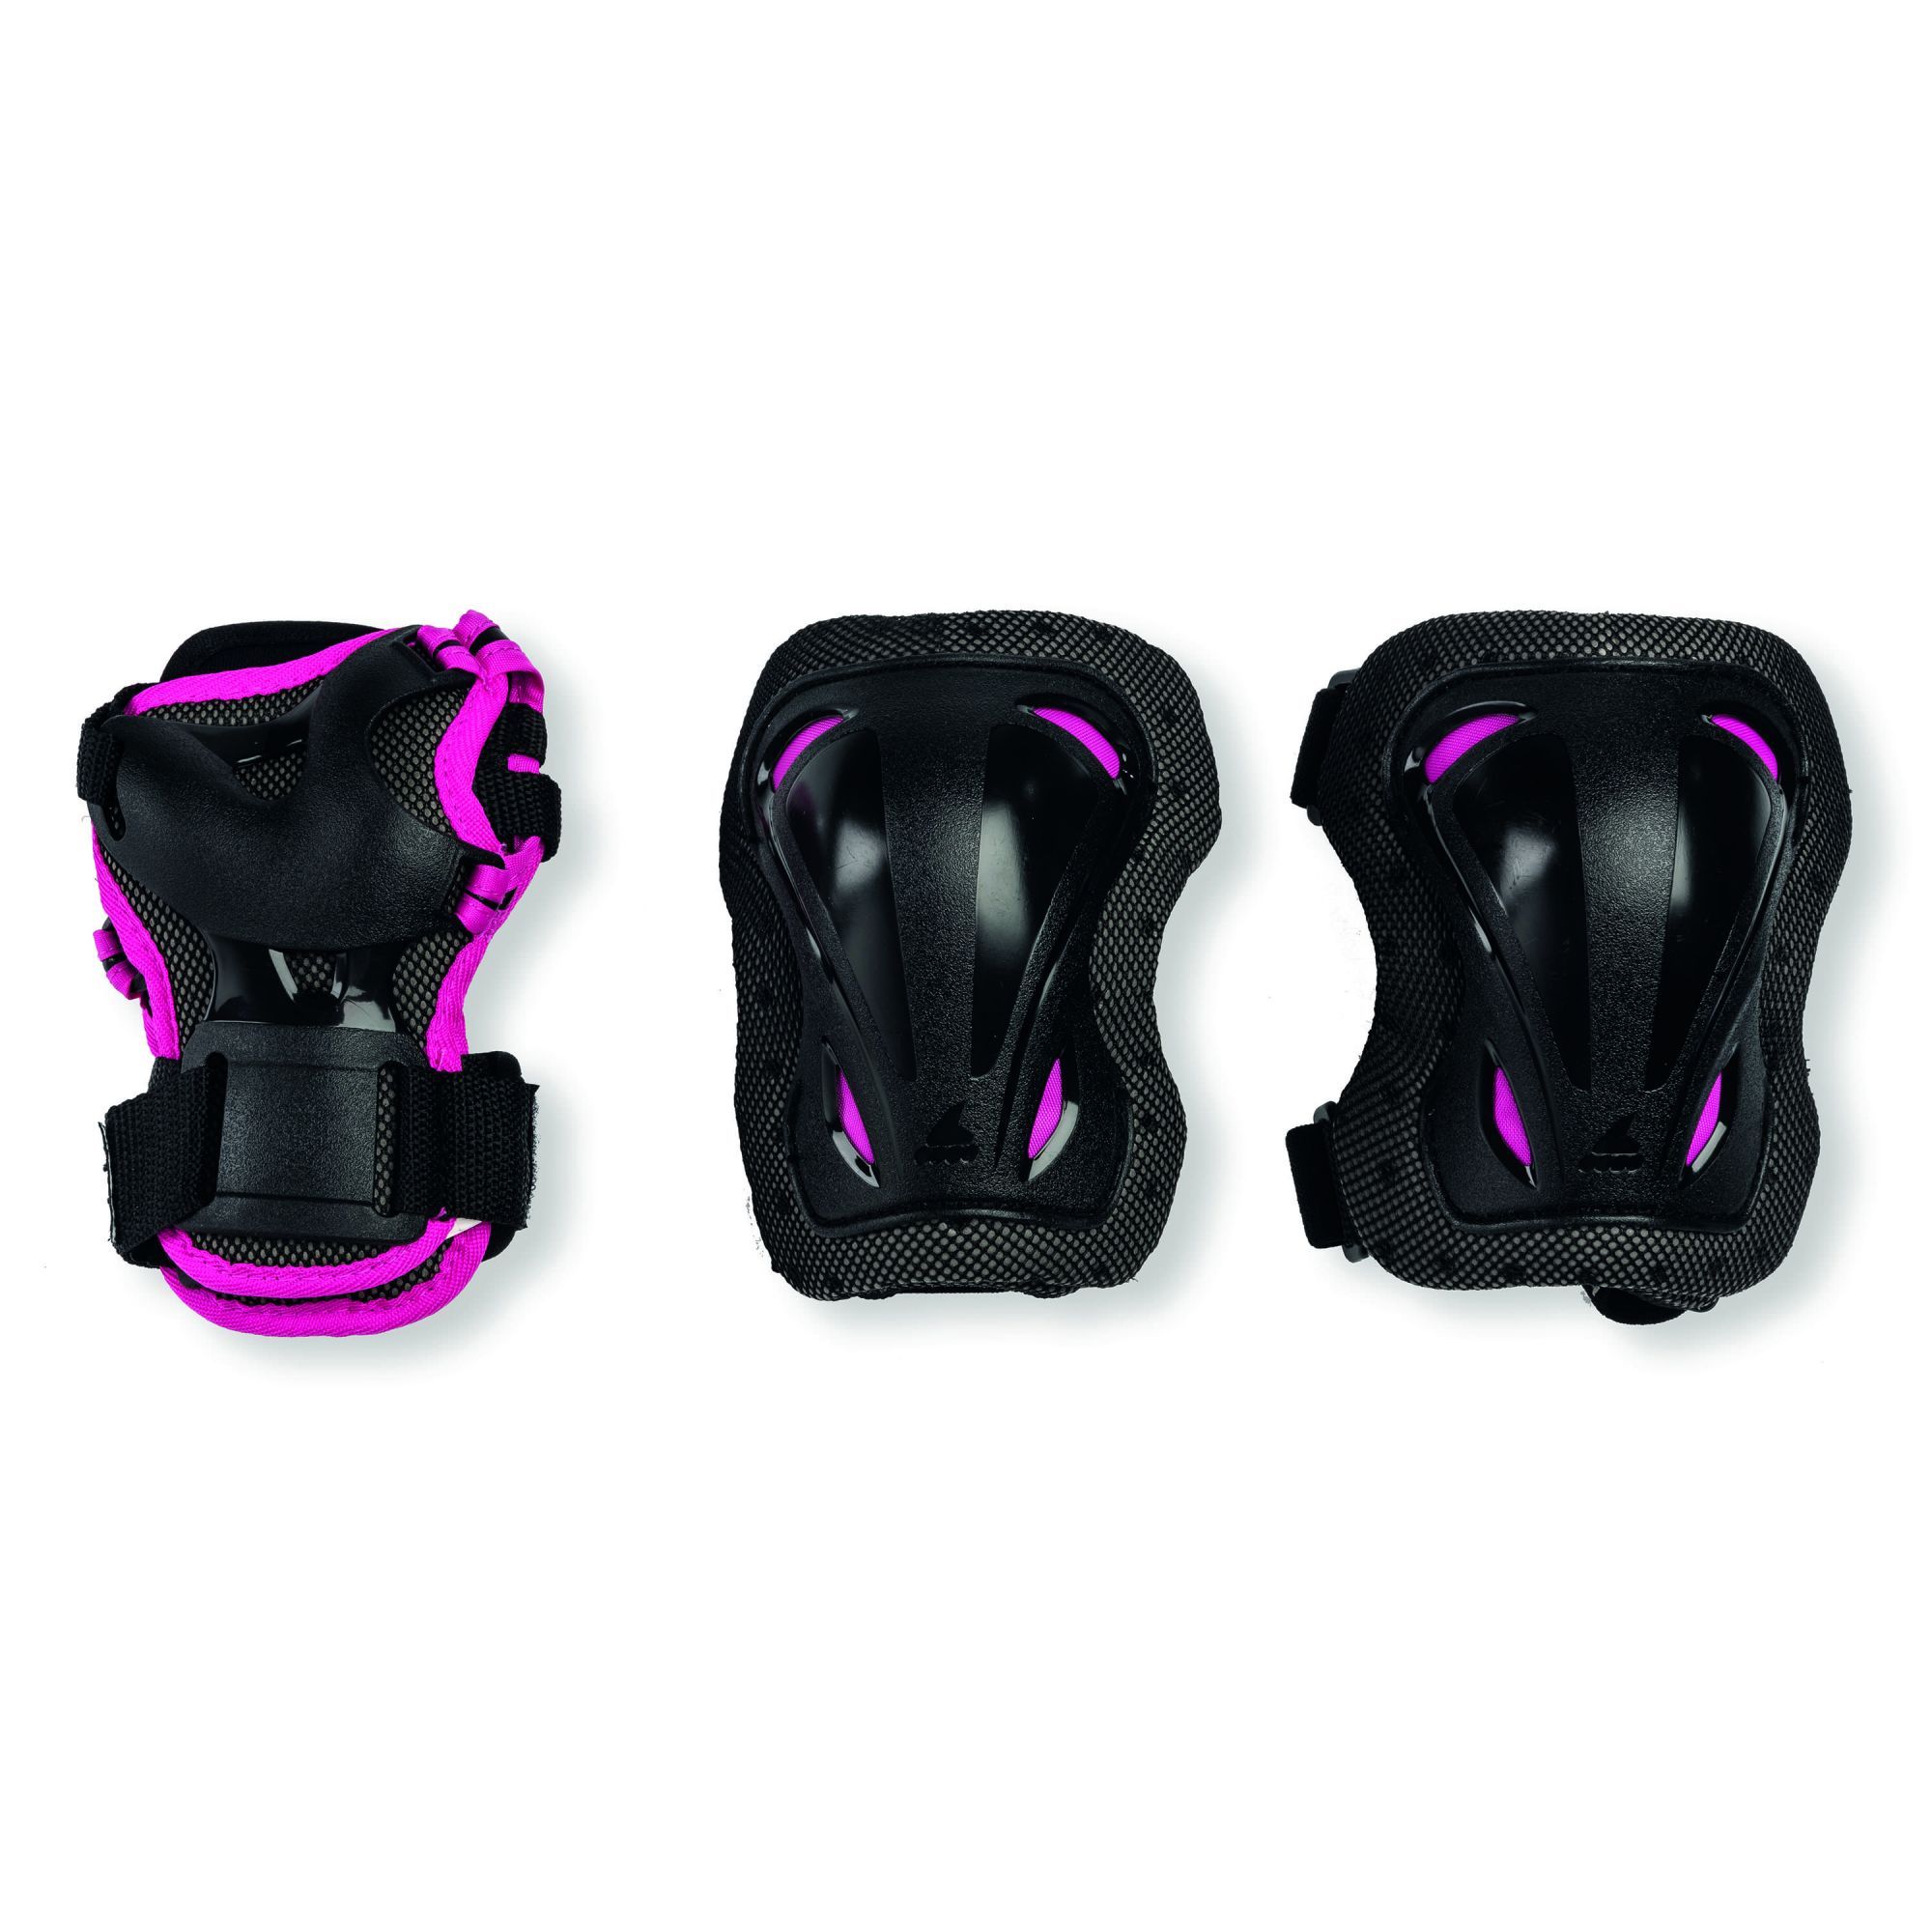 Set de Protection Skate Gear 3 Pack Junior - Noir / Rose